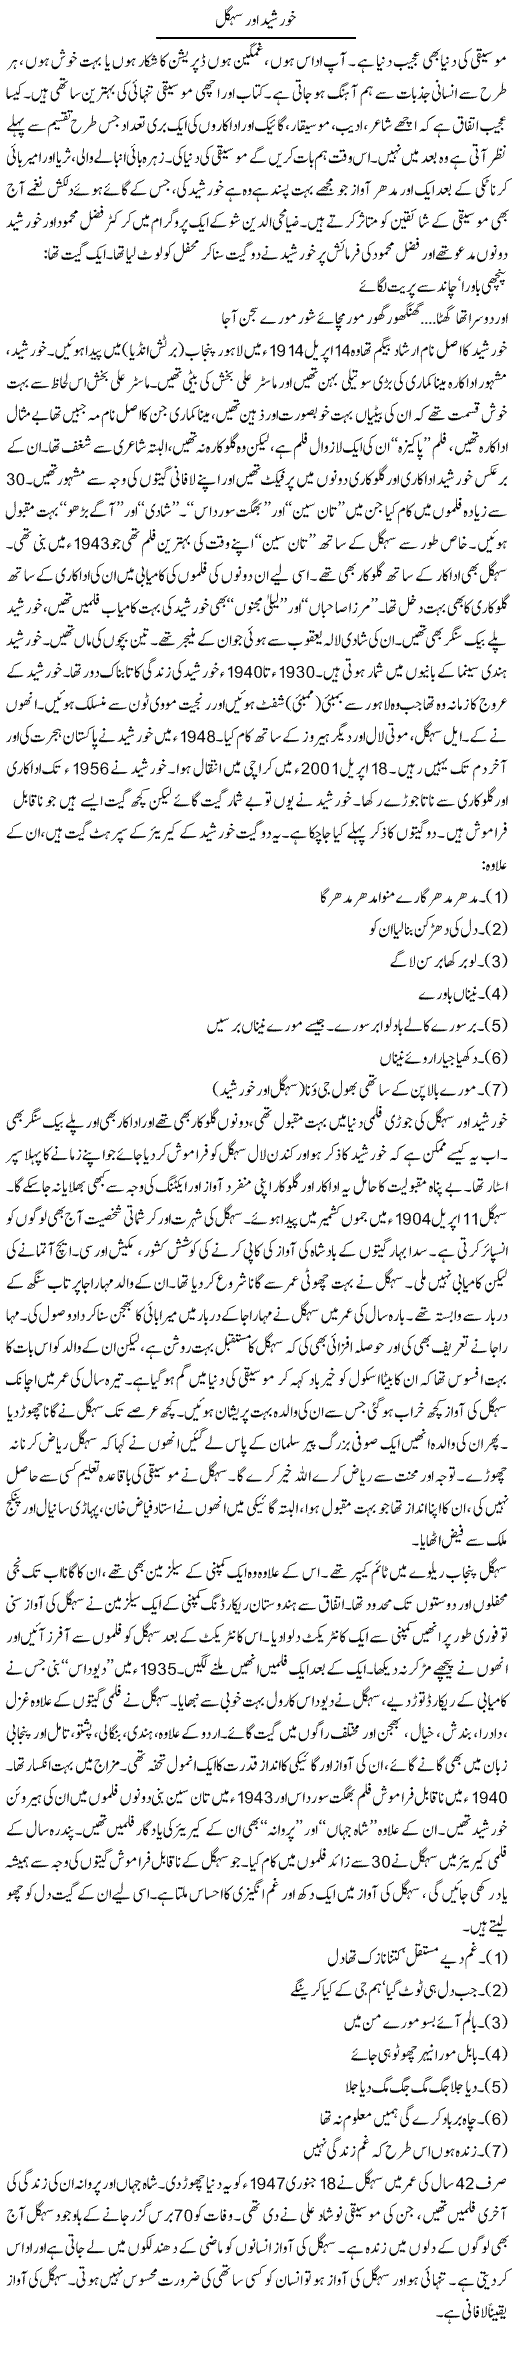 Khurshid Aur Sehgal | Raees Fatima | Daily Urdu Columns